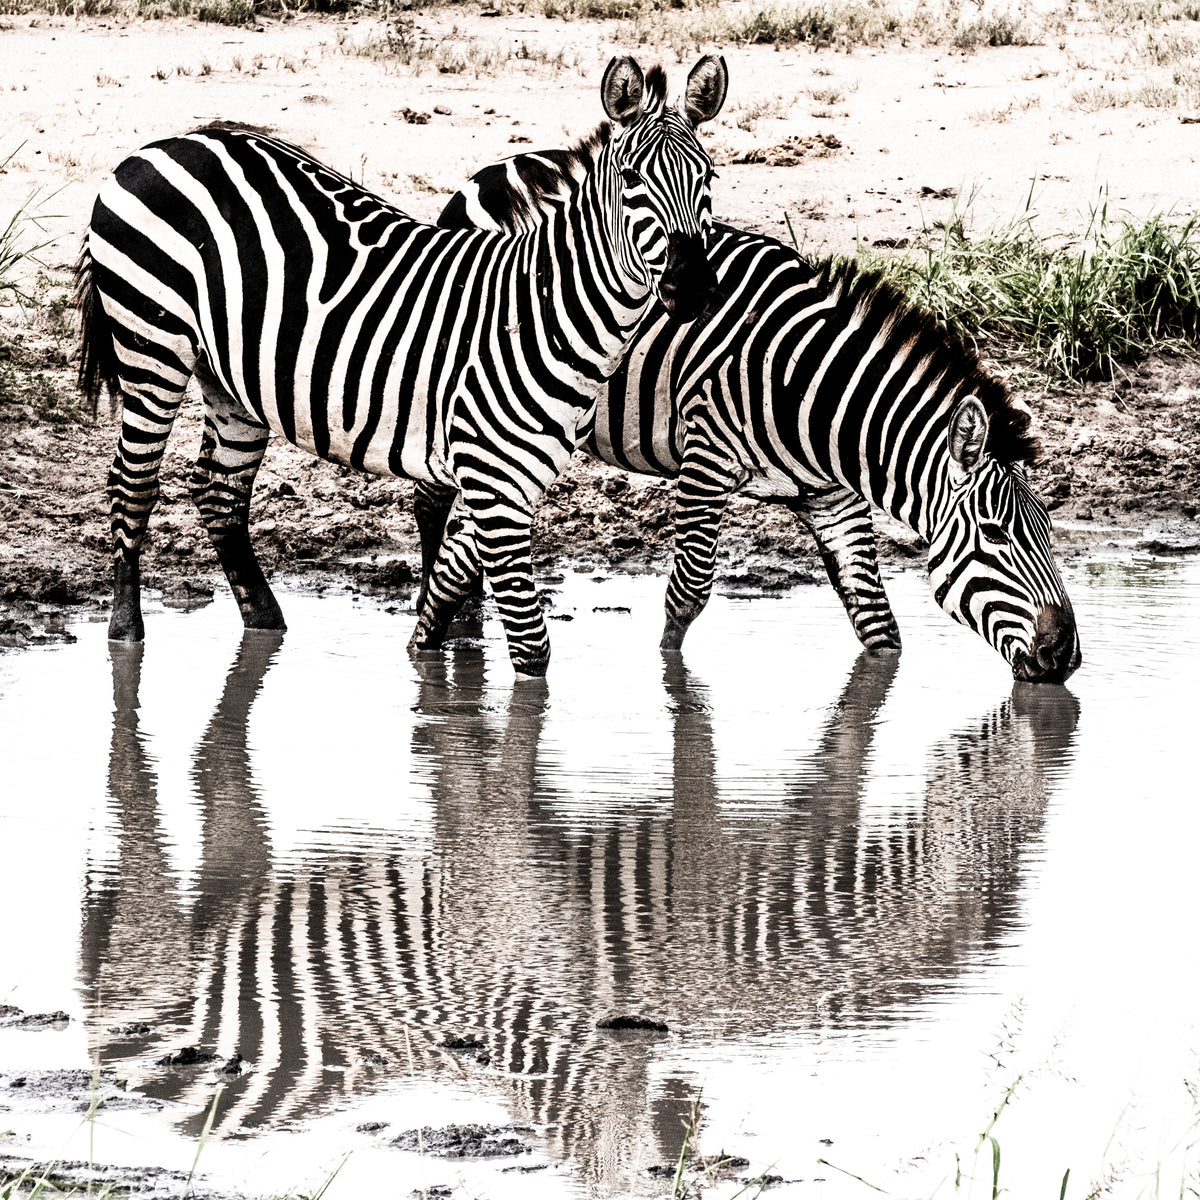 Zebras in water